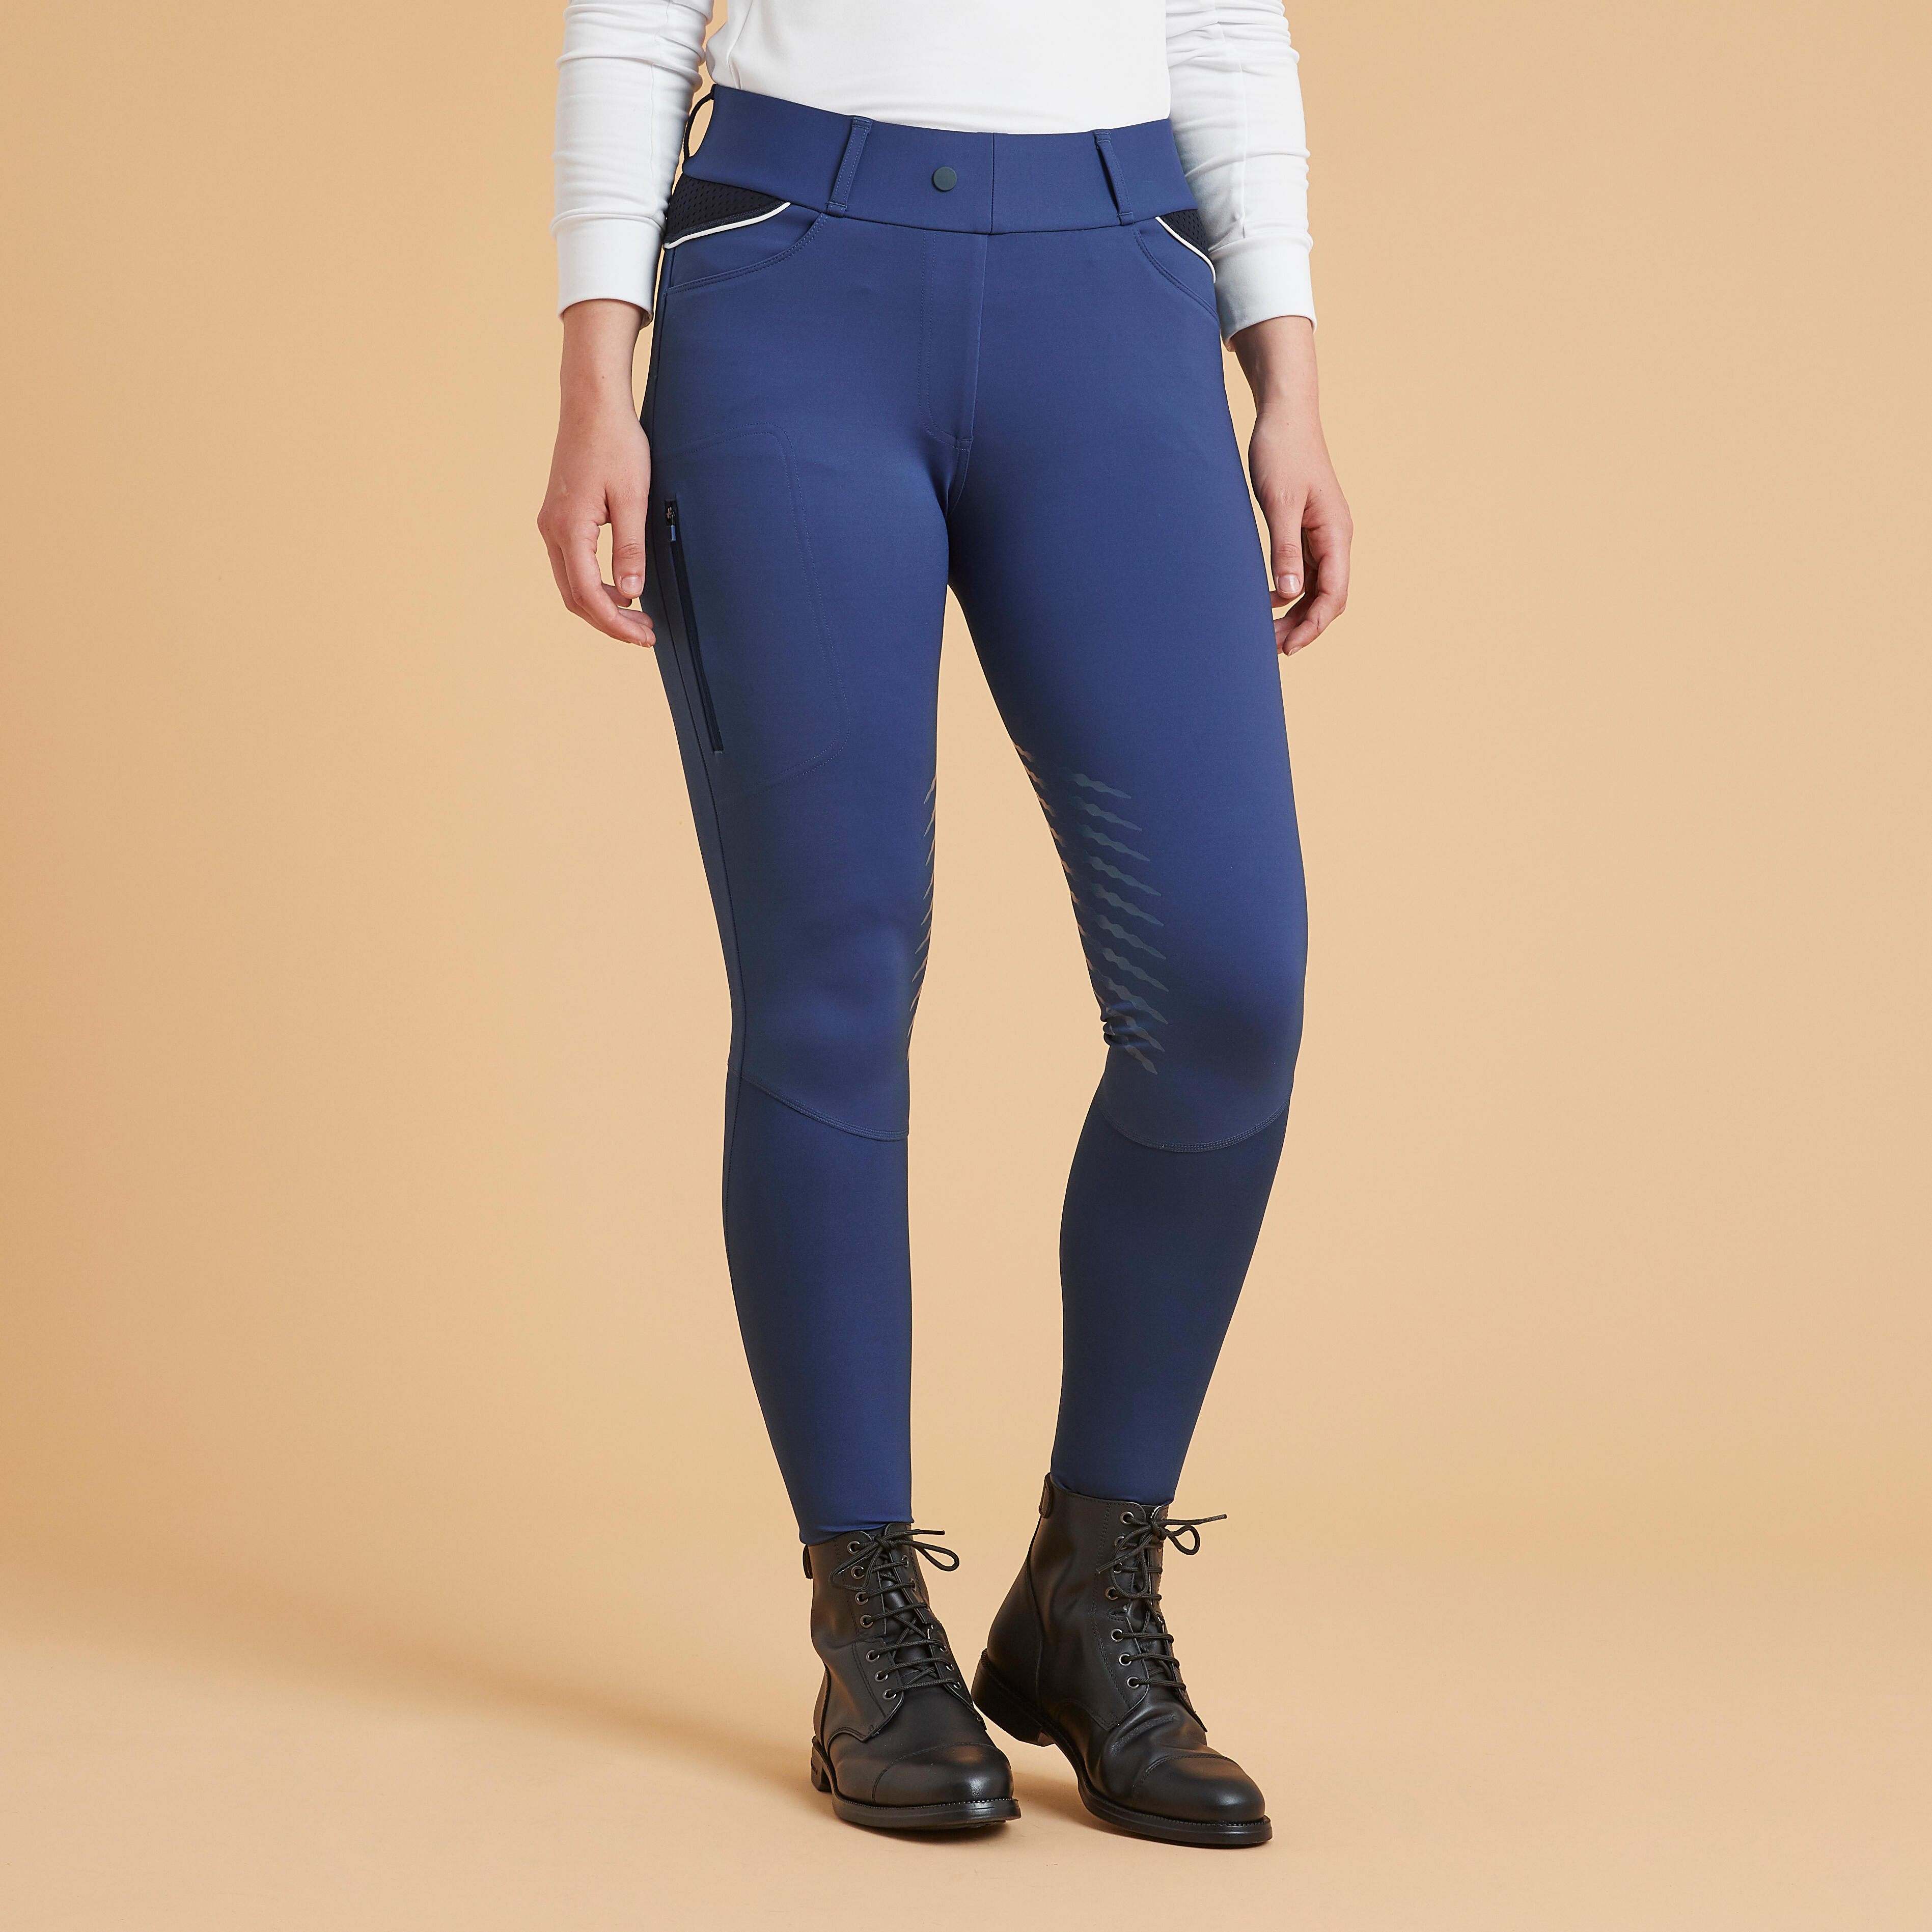 legging équitation jump grip femme - 900 bleu turquin - fouganza